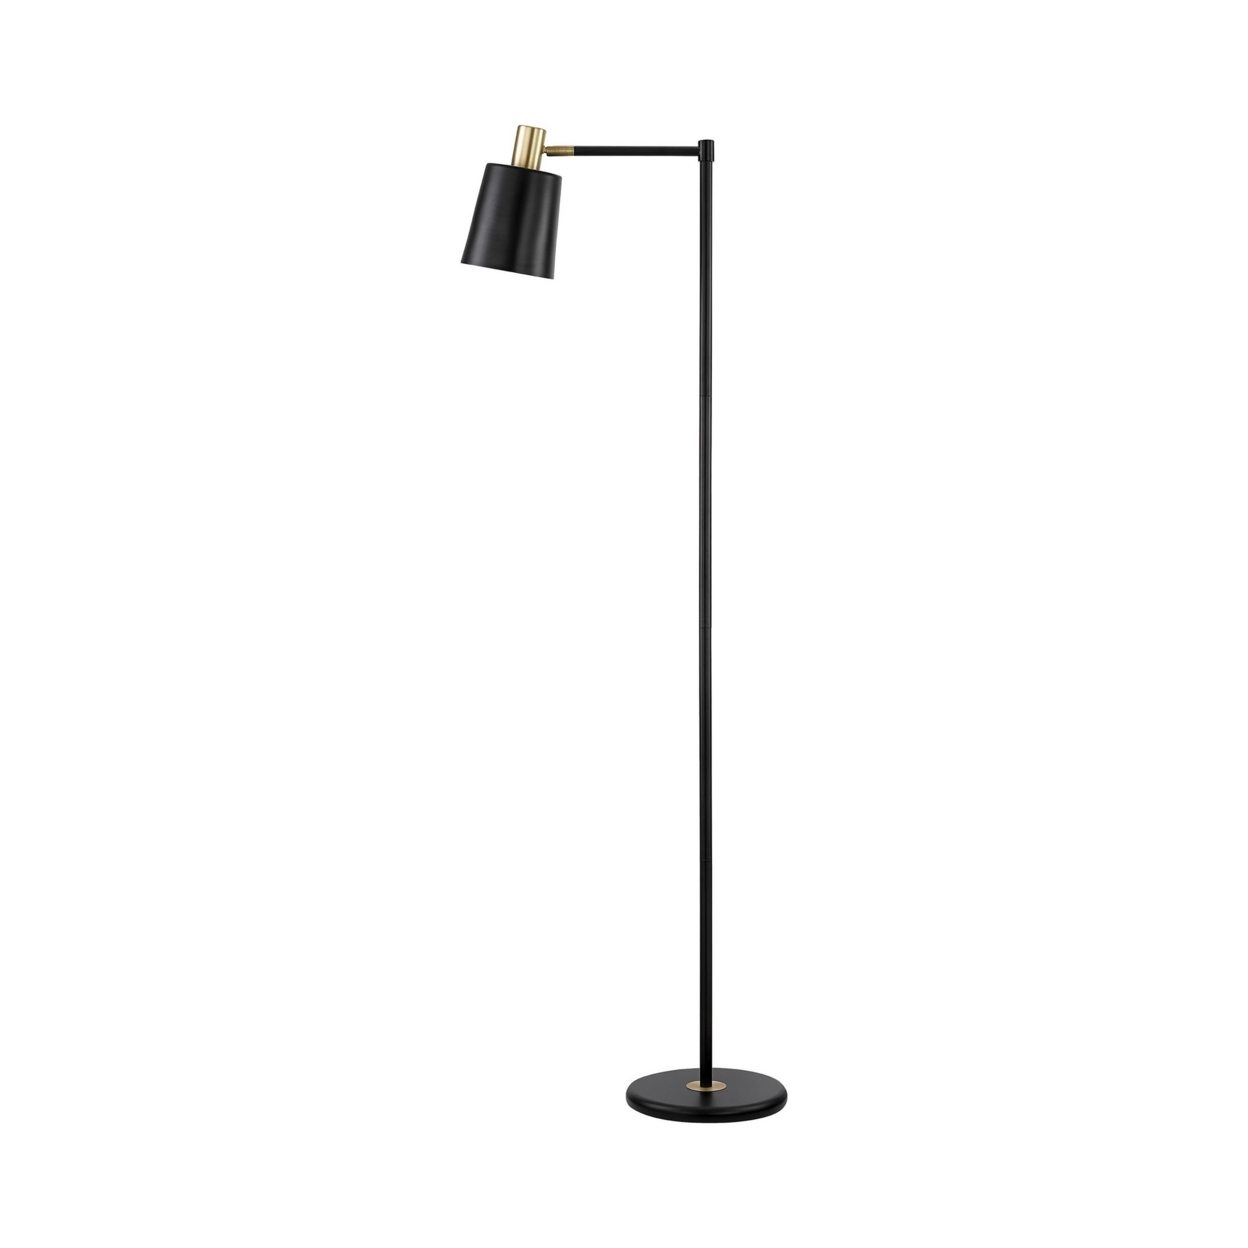 Tubular Metal Floor Lamp With Horn Style Shade, Black- Saltoro Sherpi